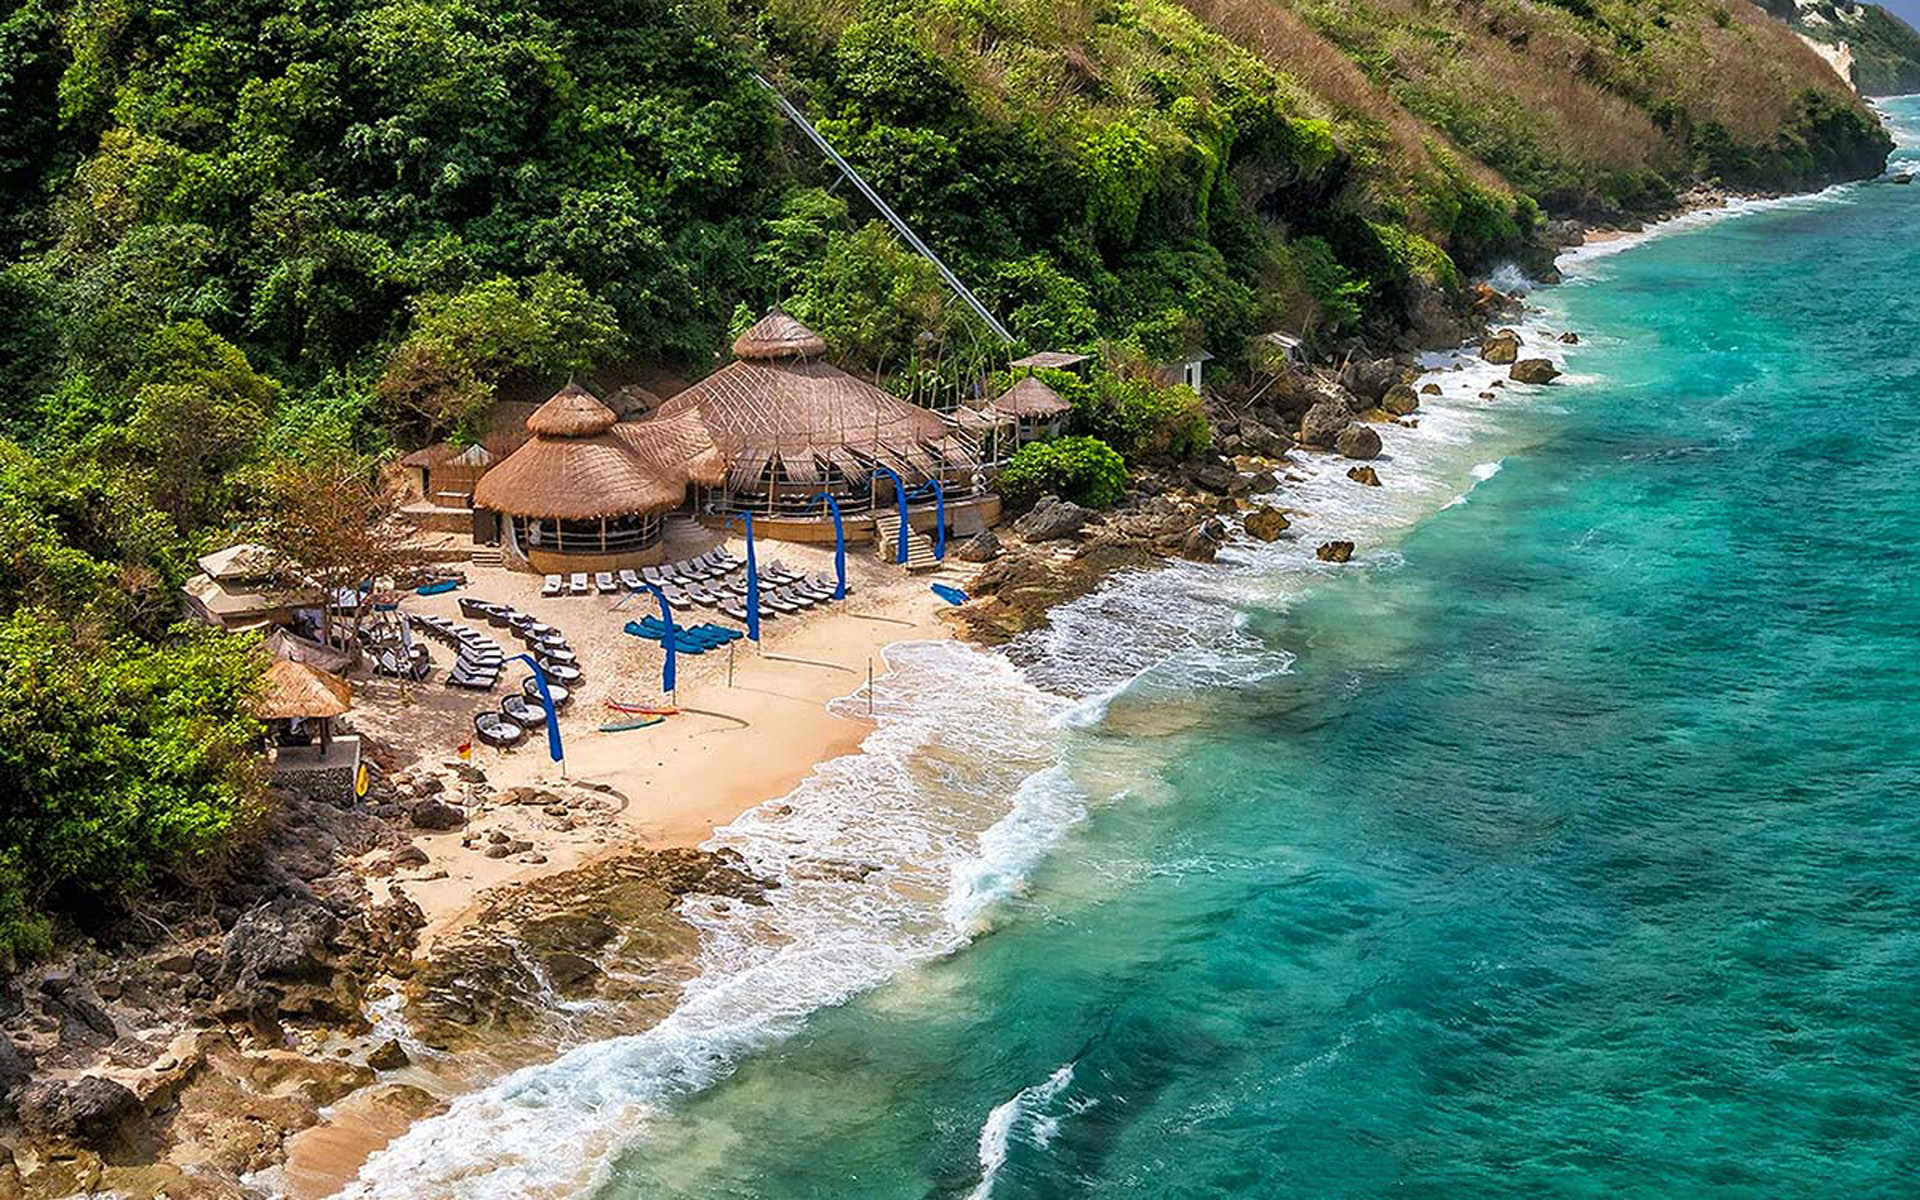 bali beaches hidden indonesia karma secret coastline magazine unexplored resorts wallpapers13 jimbaran balangan kandara